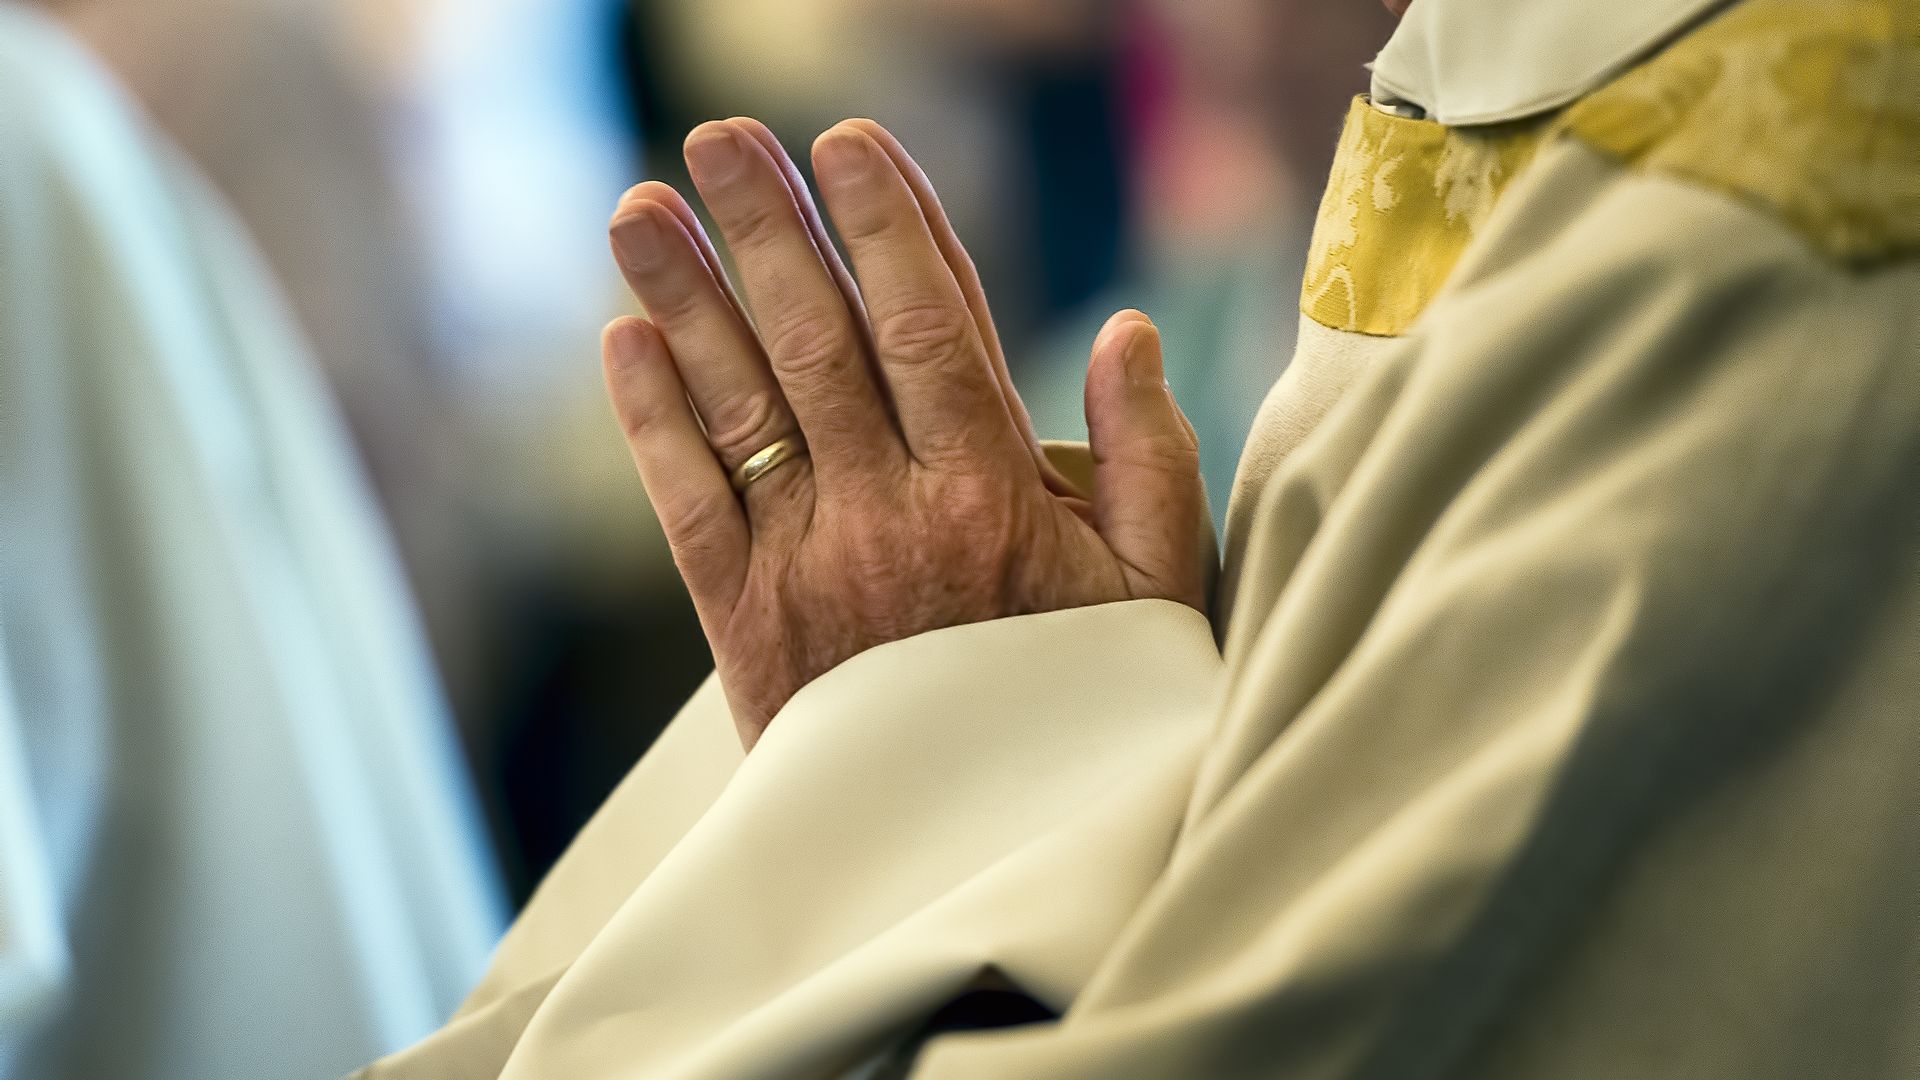 A priest's hands in prayer